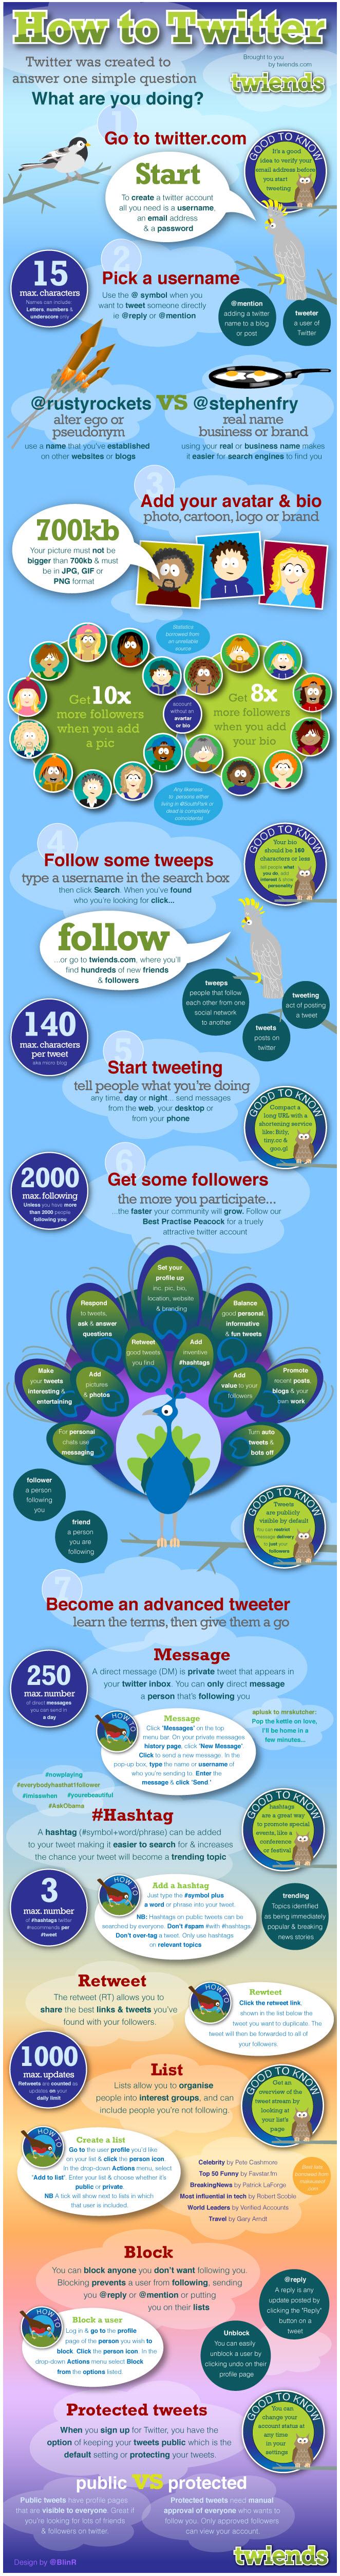 Twitter-Marketing-Infographic1